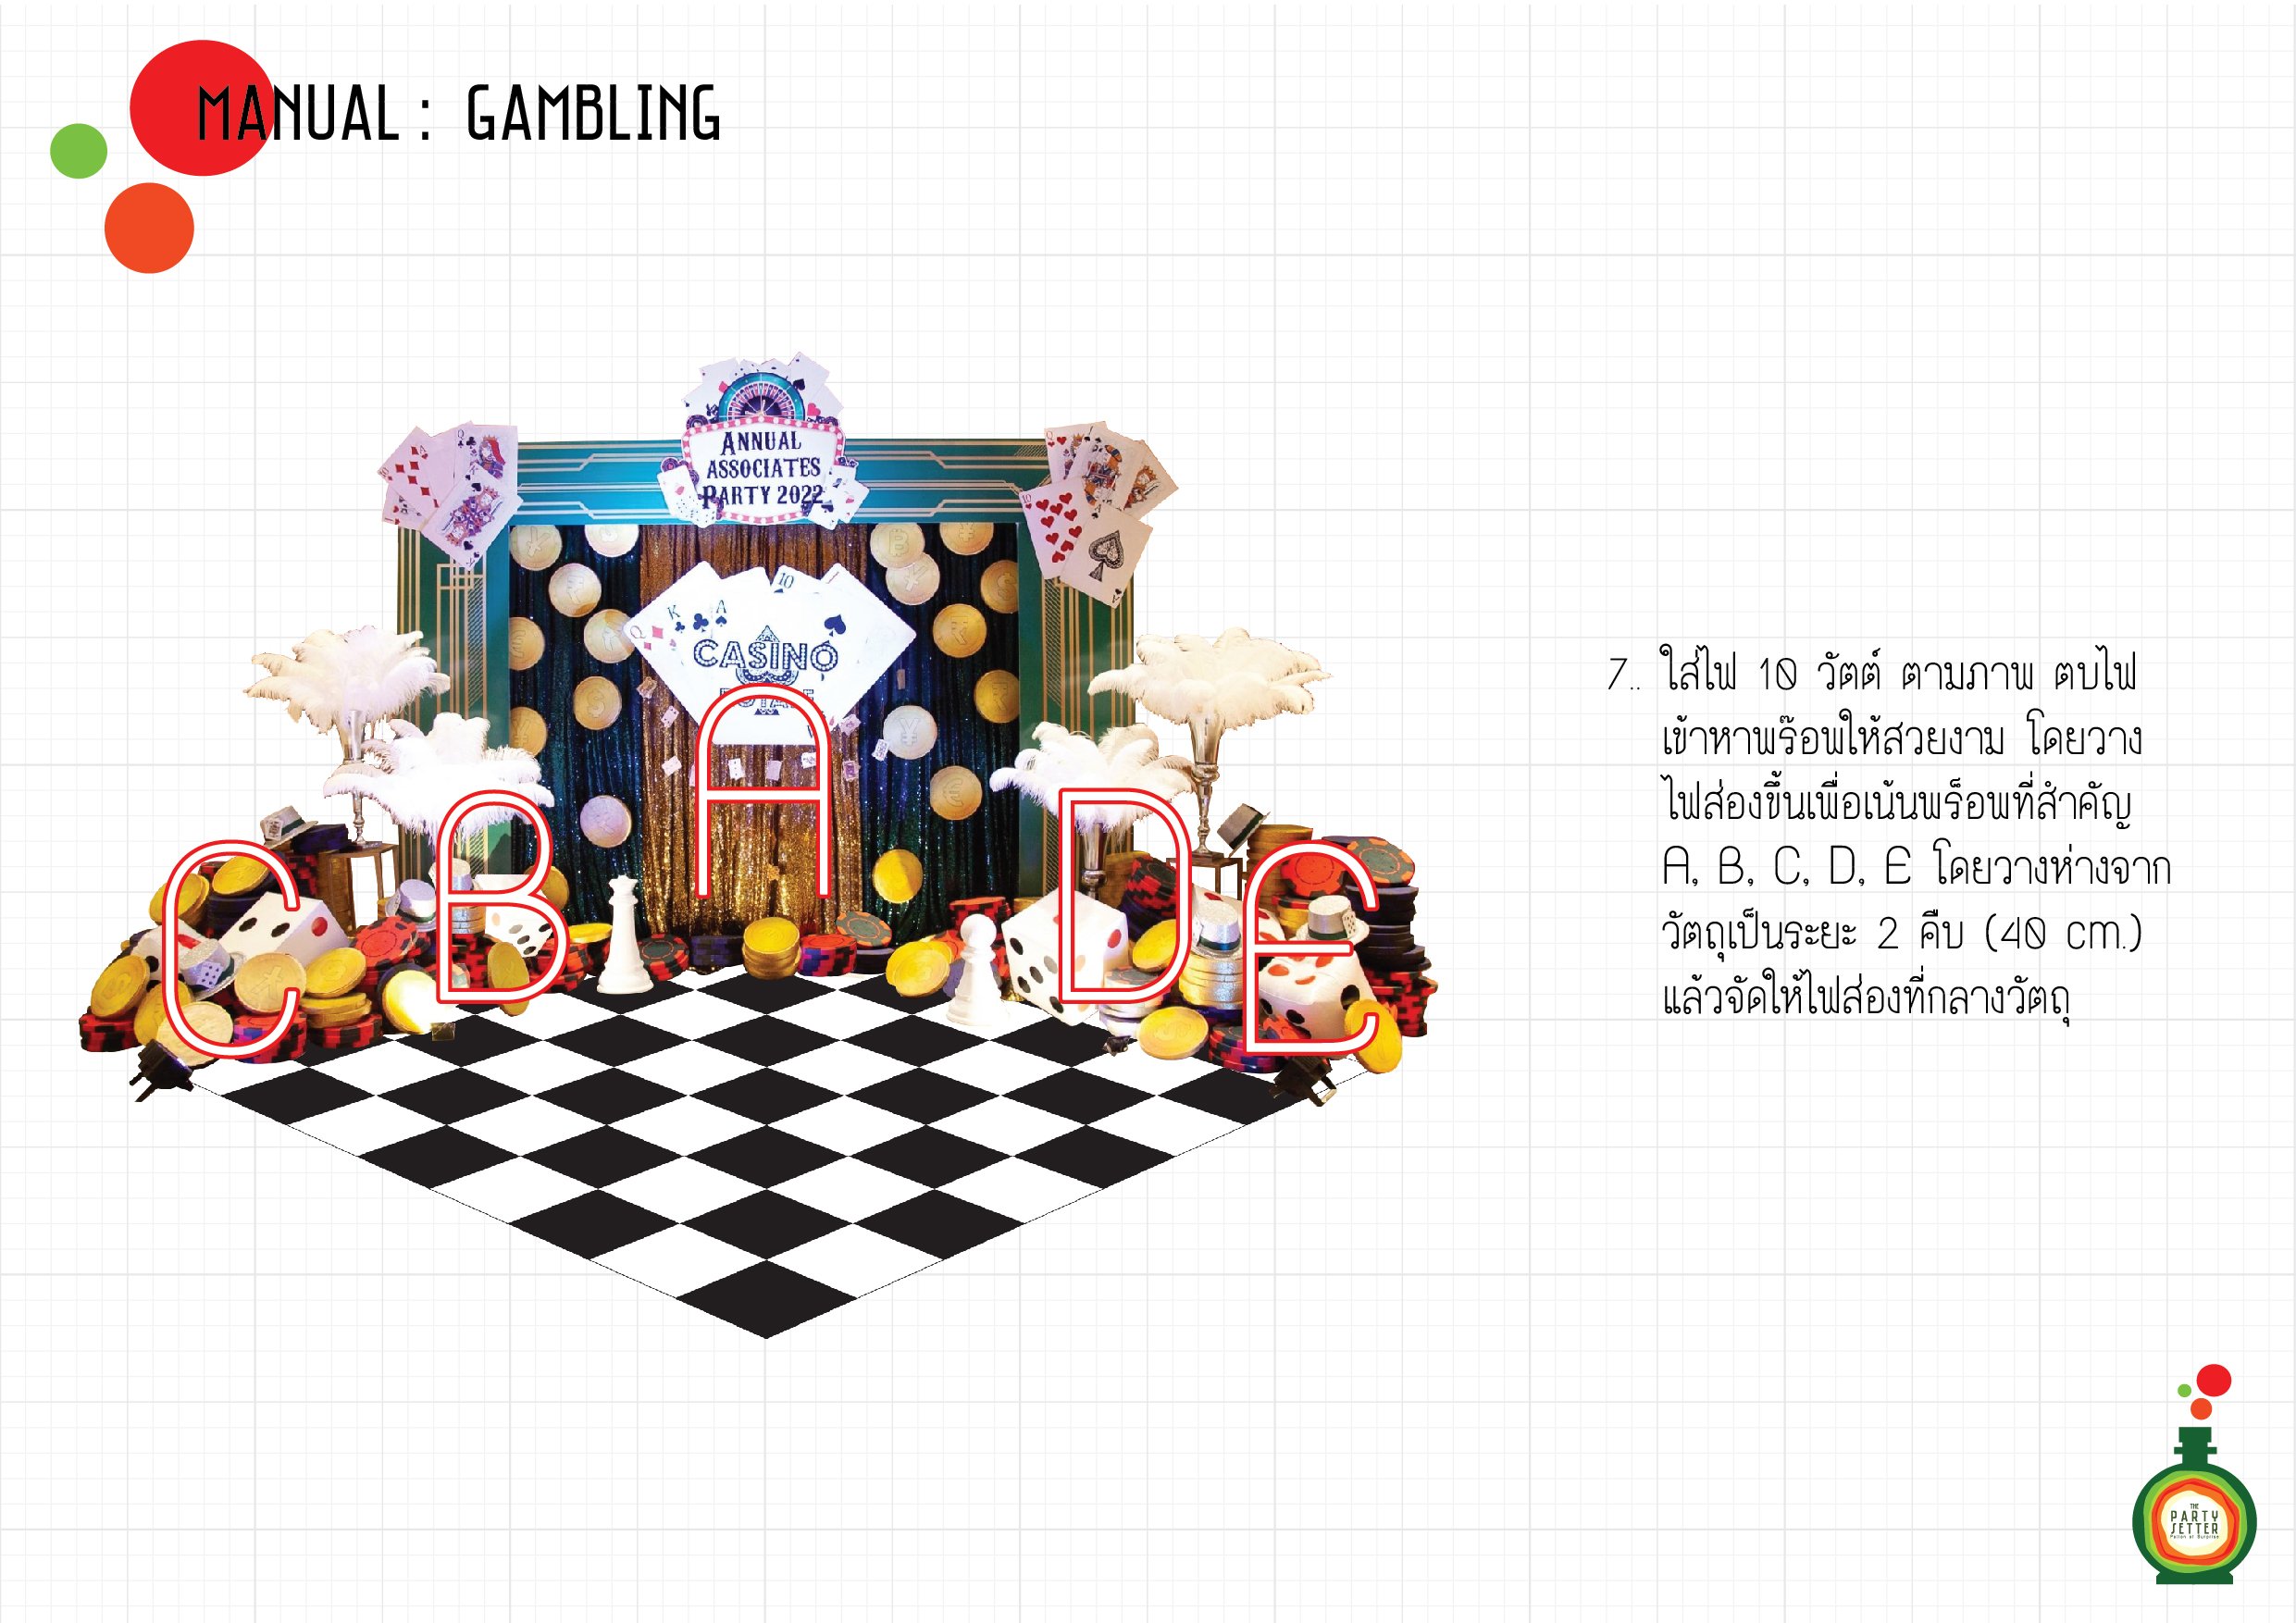 Manual_Gambling-07-01.jpg